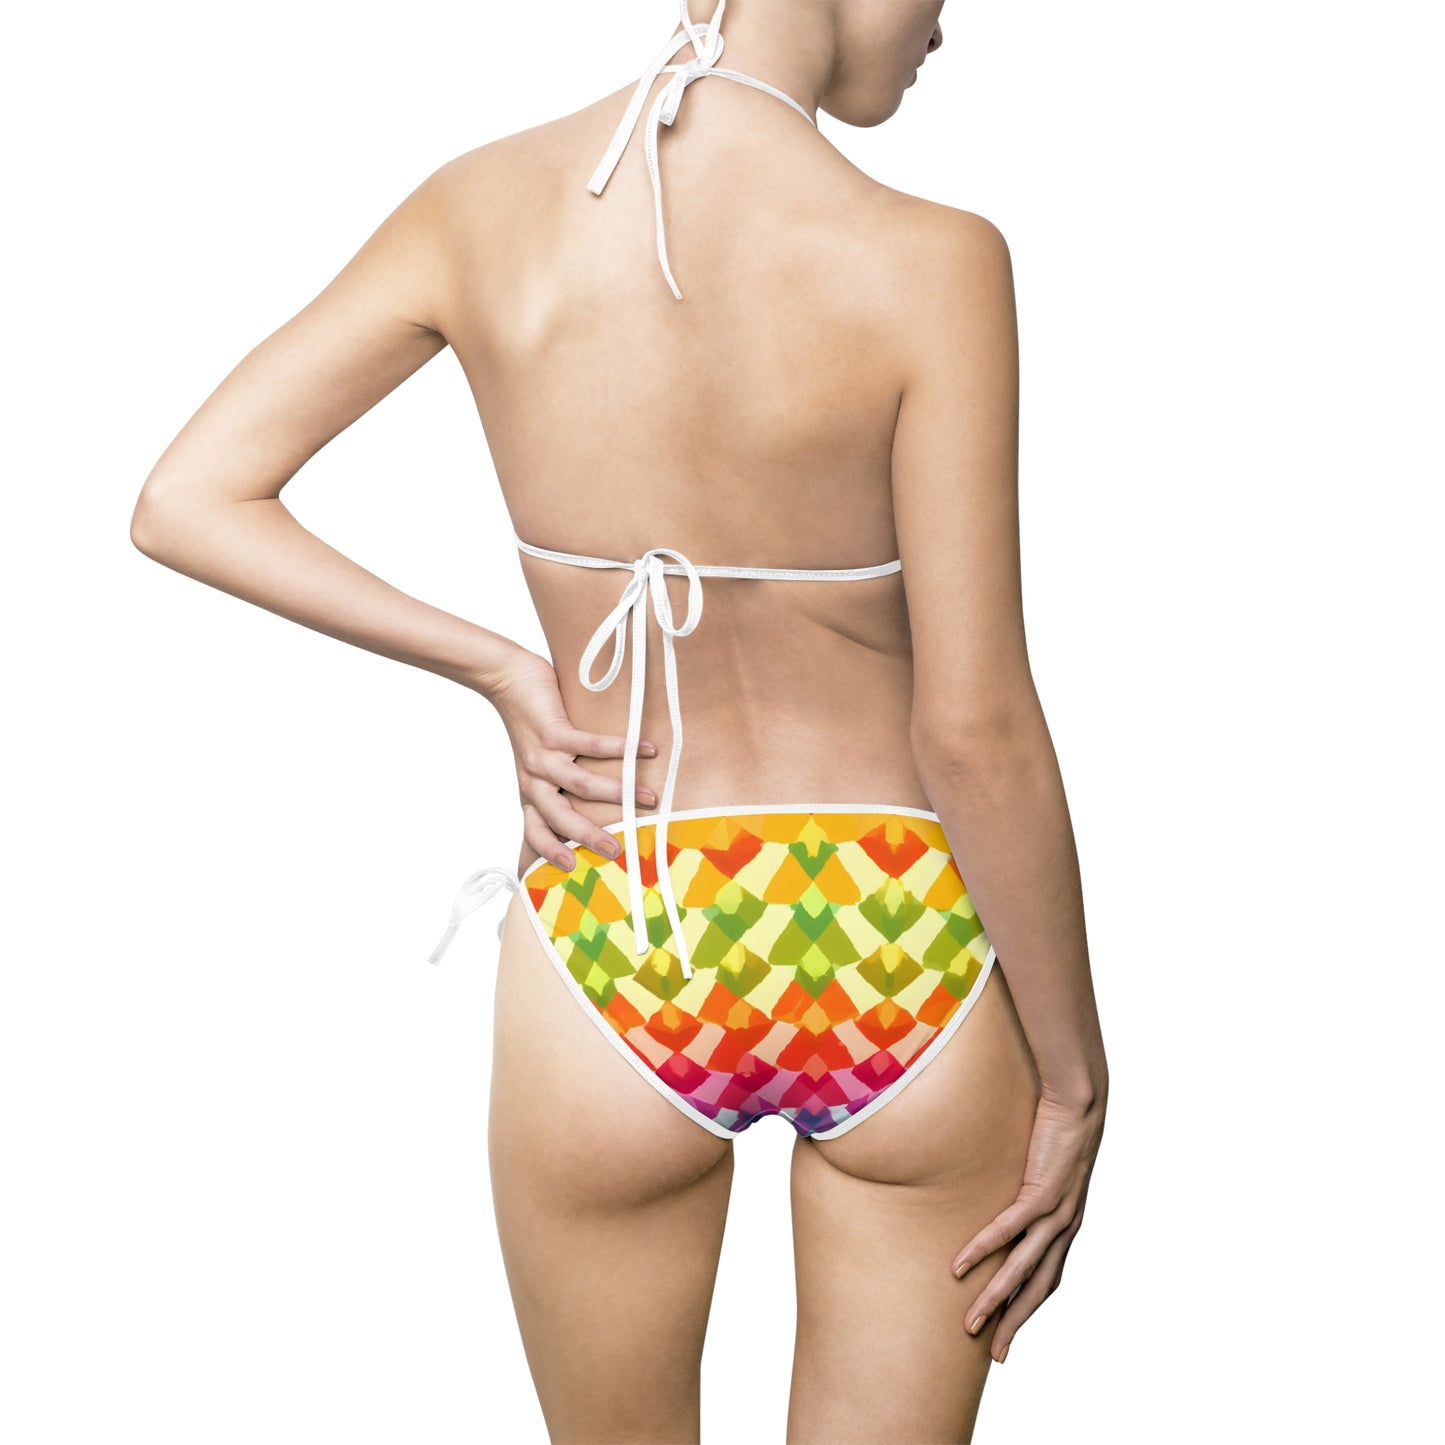 Standa Lorraine - Women's Bikini Swimsuit